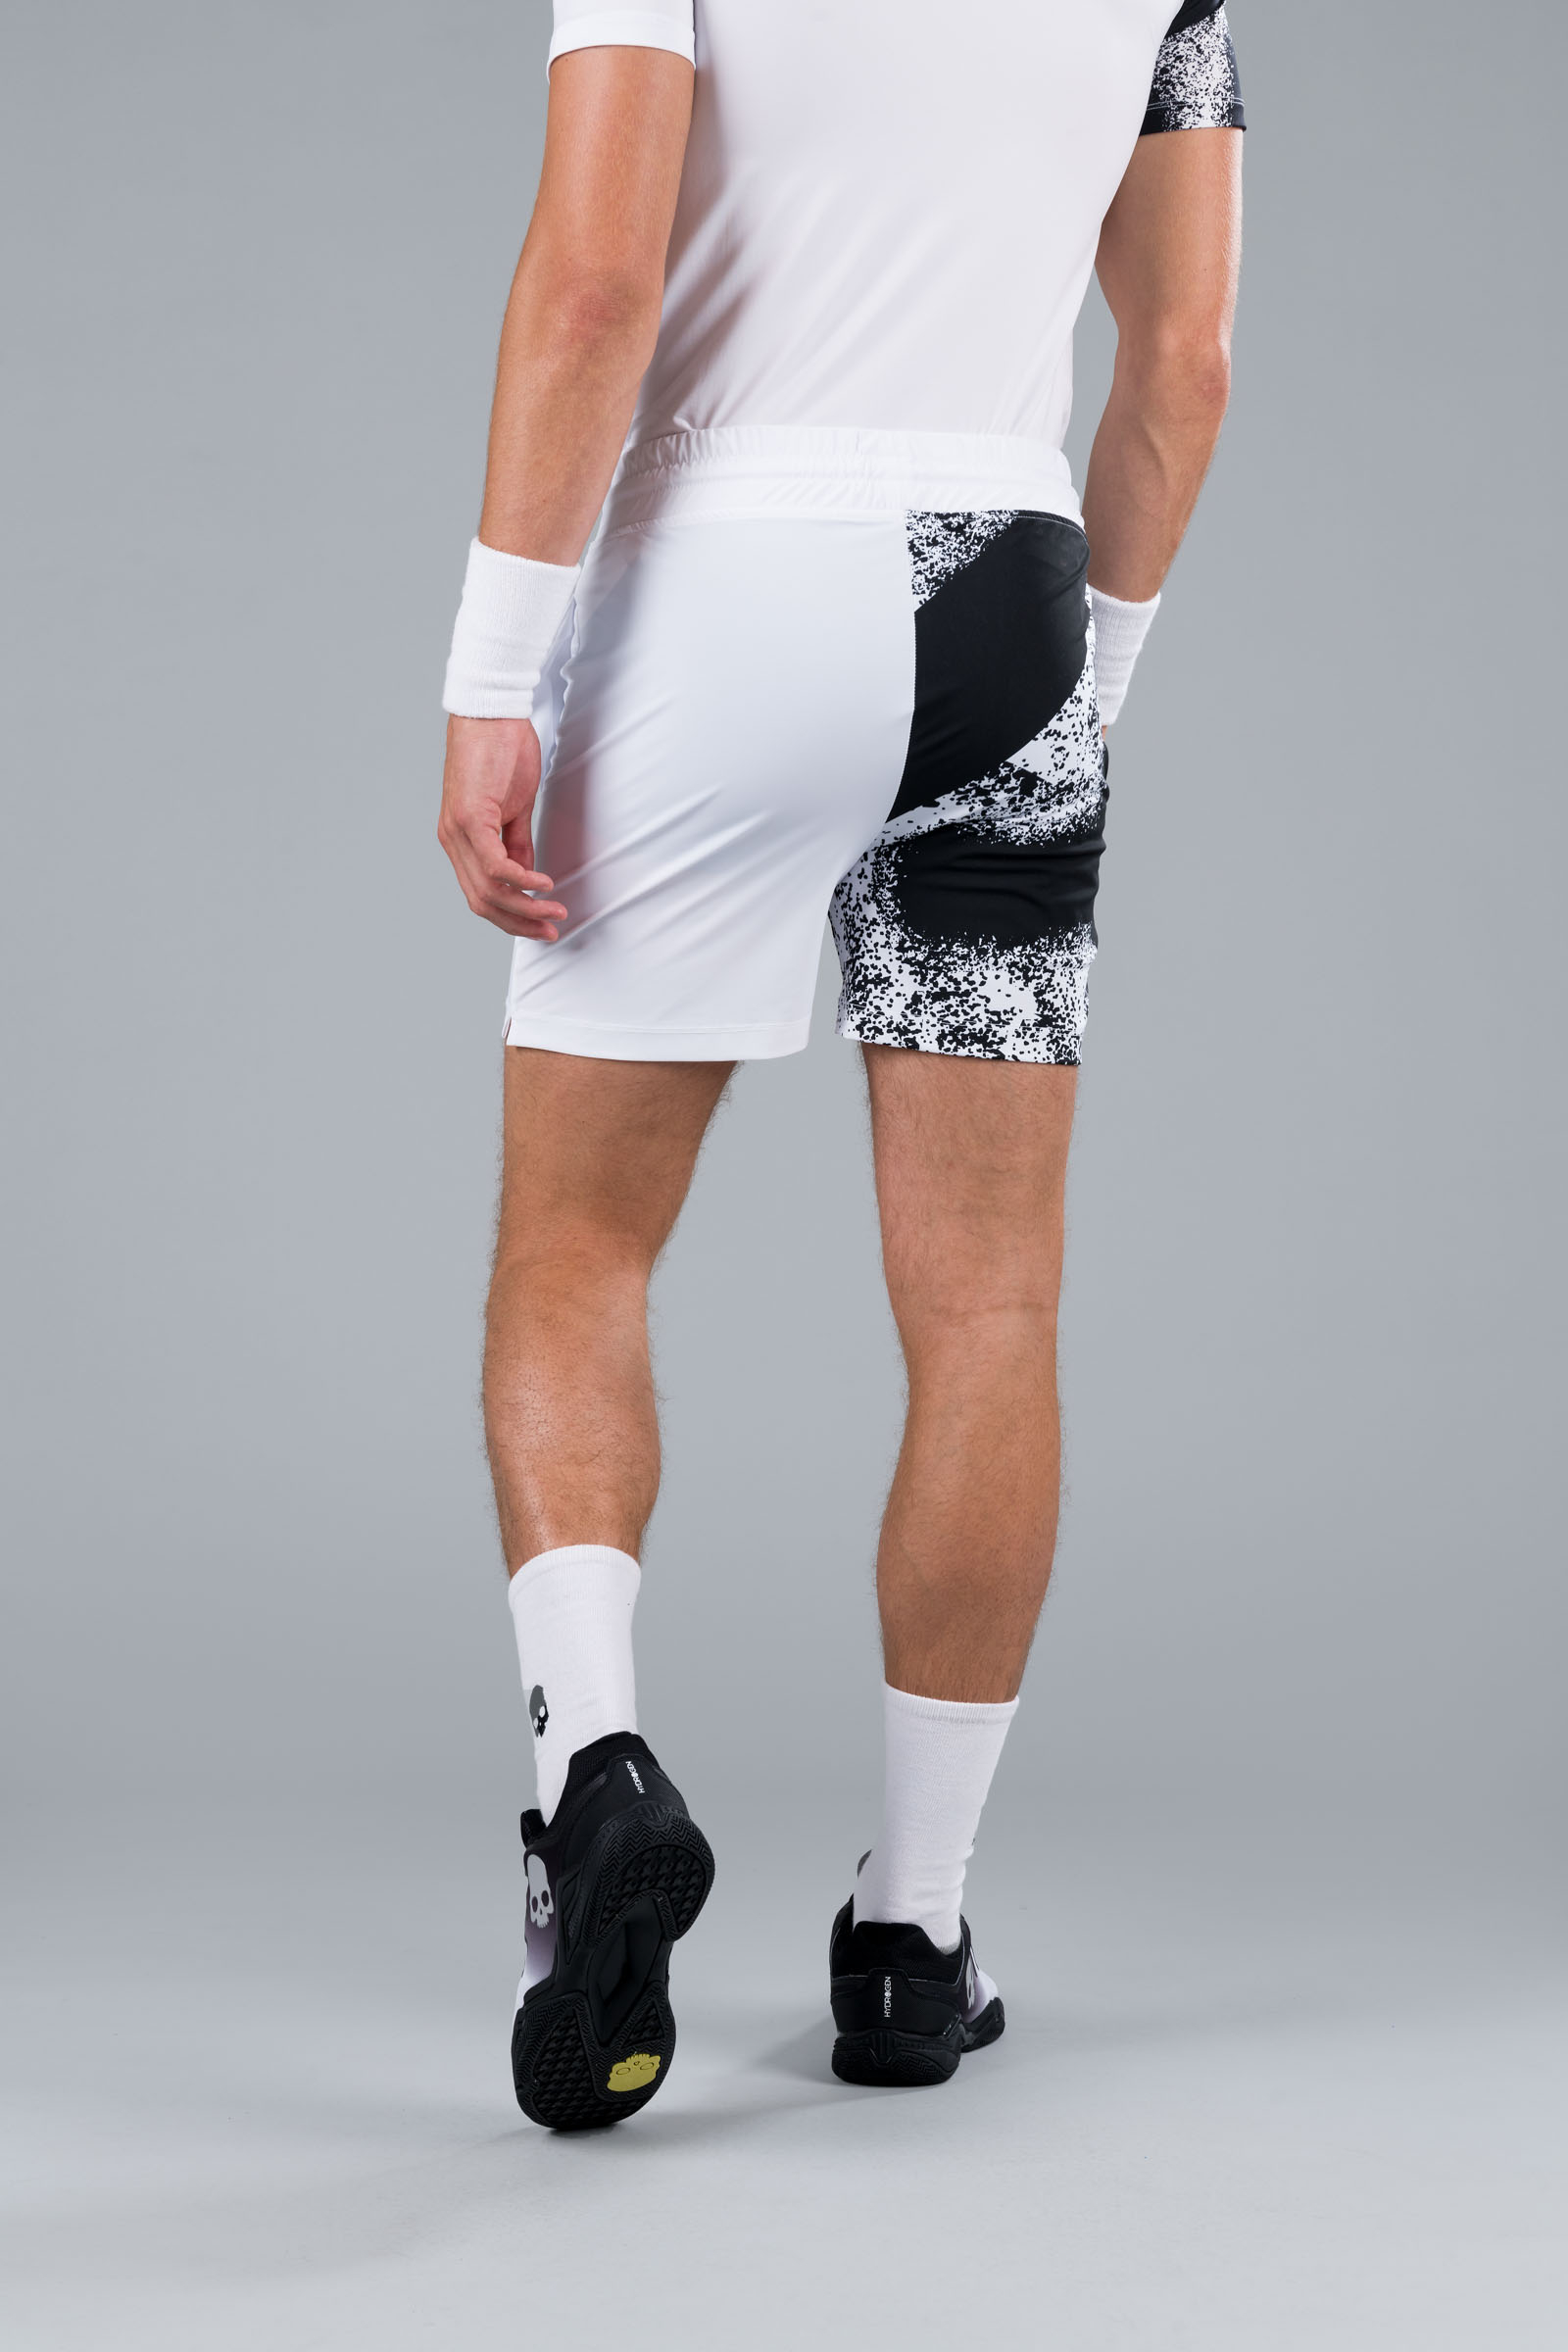 SPRAY TECH SHORTS - WHITE - Abbigliamento sportivo | Hydrogen